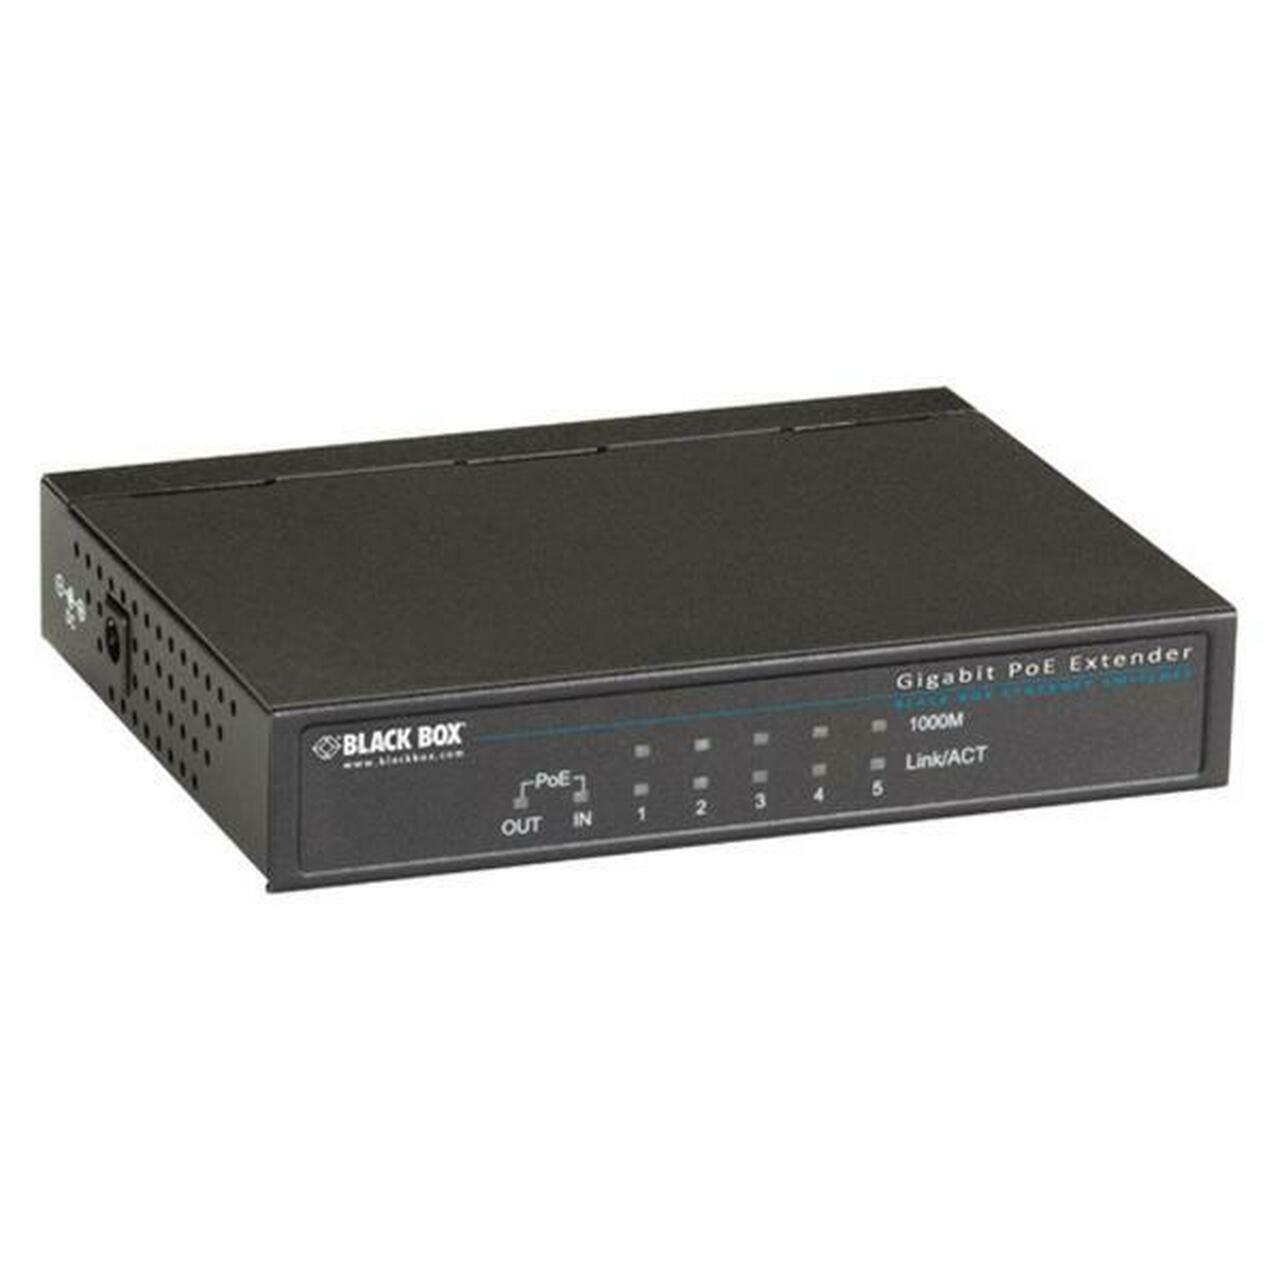 Black Box LPR1131 Gigabit PoE Repeater, Black Box LPR1131, PoE Repeater